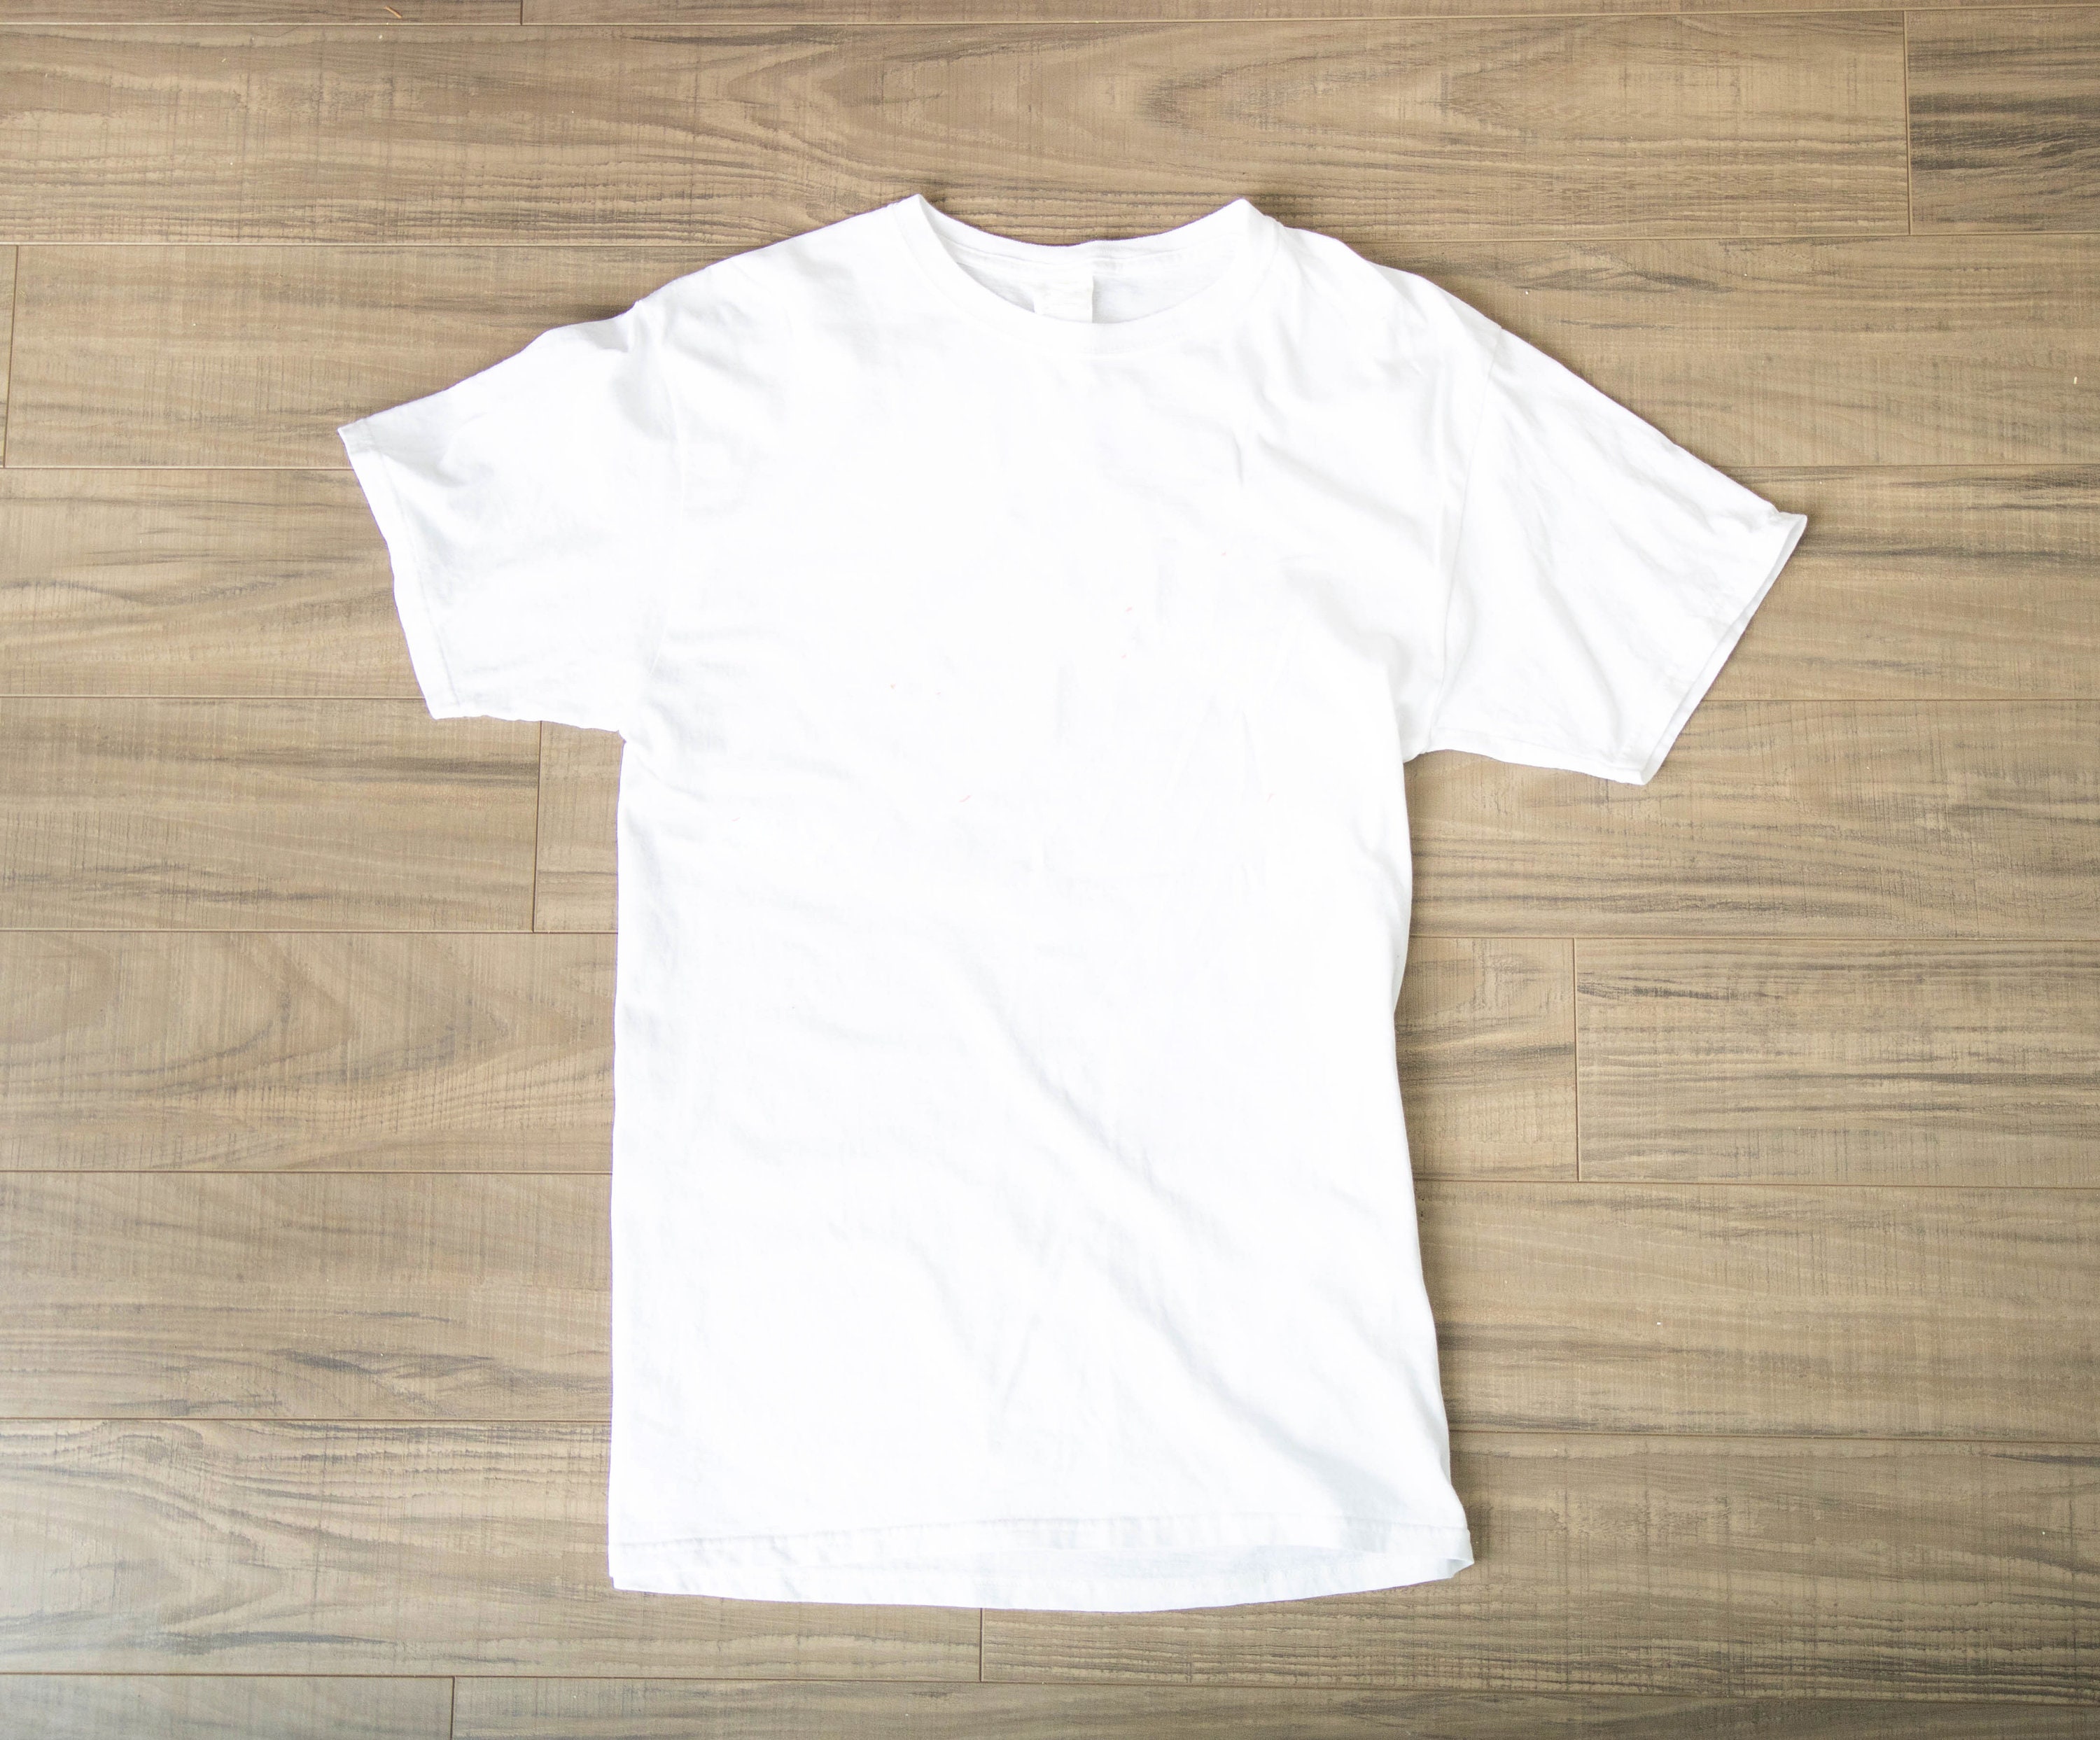 Download Blank White T Shirt Mockup Etsy